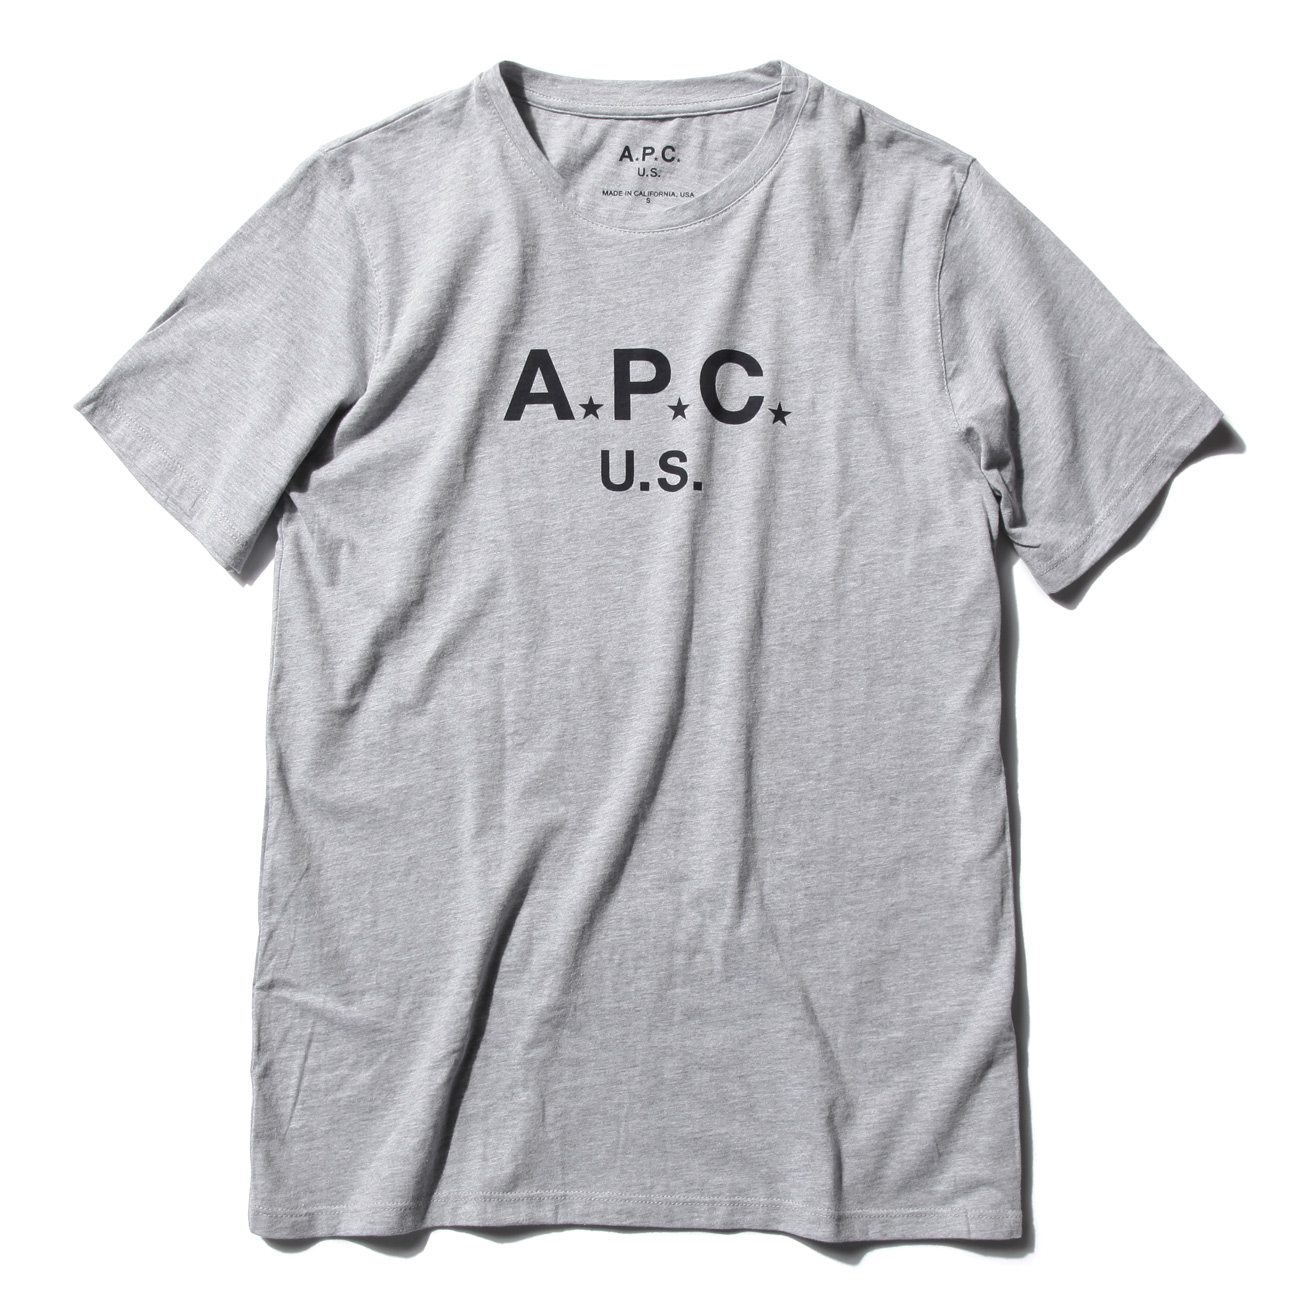 A.P.C. U.S. メンズTシャツ - 杢 Pale Gray